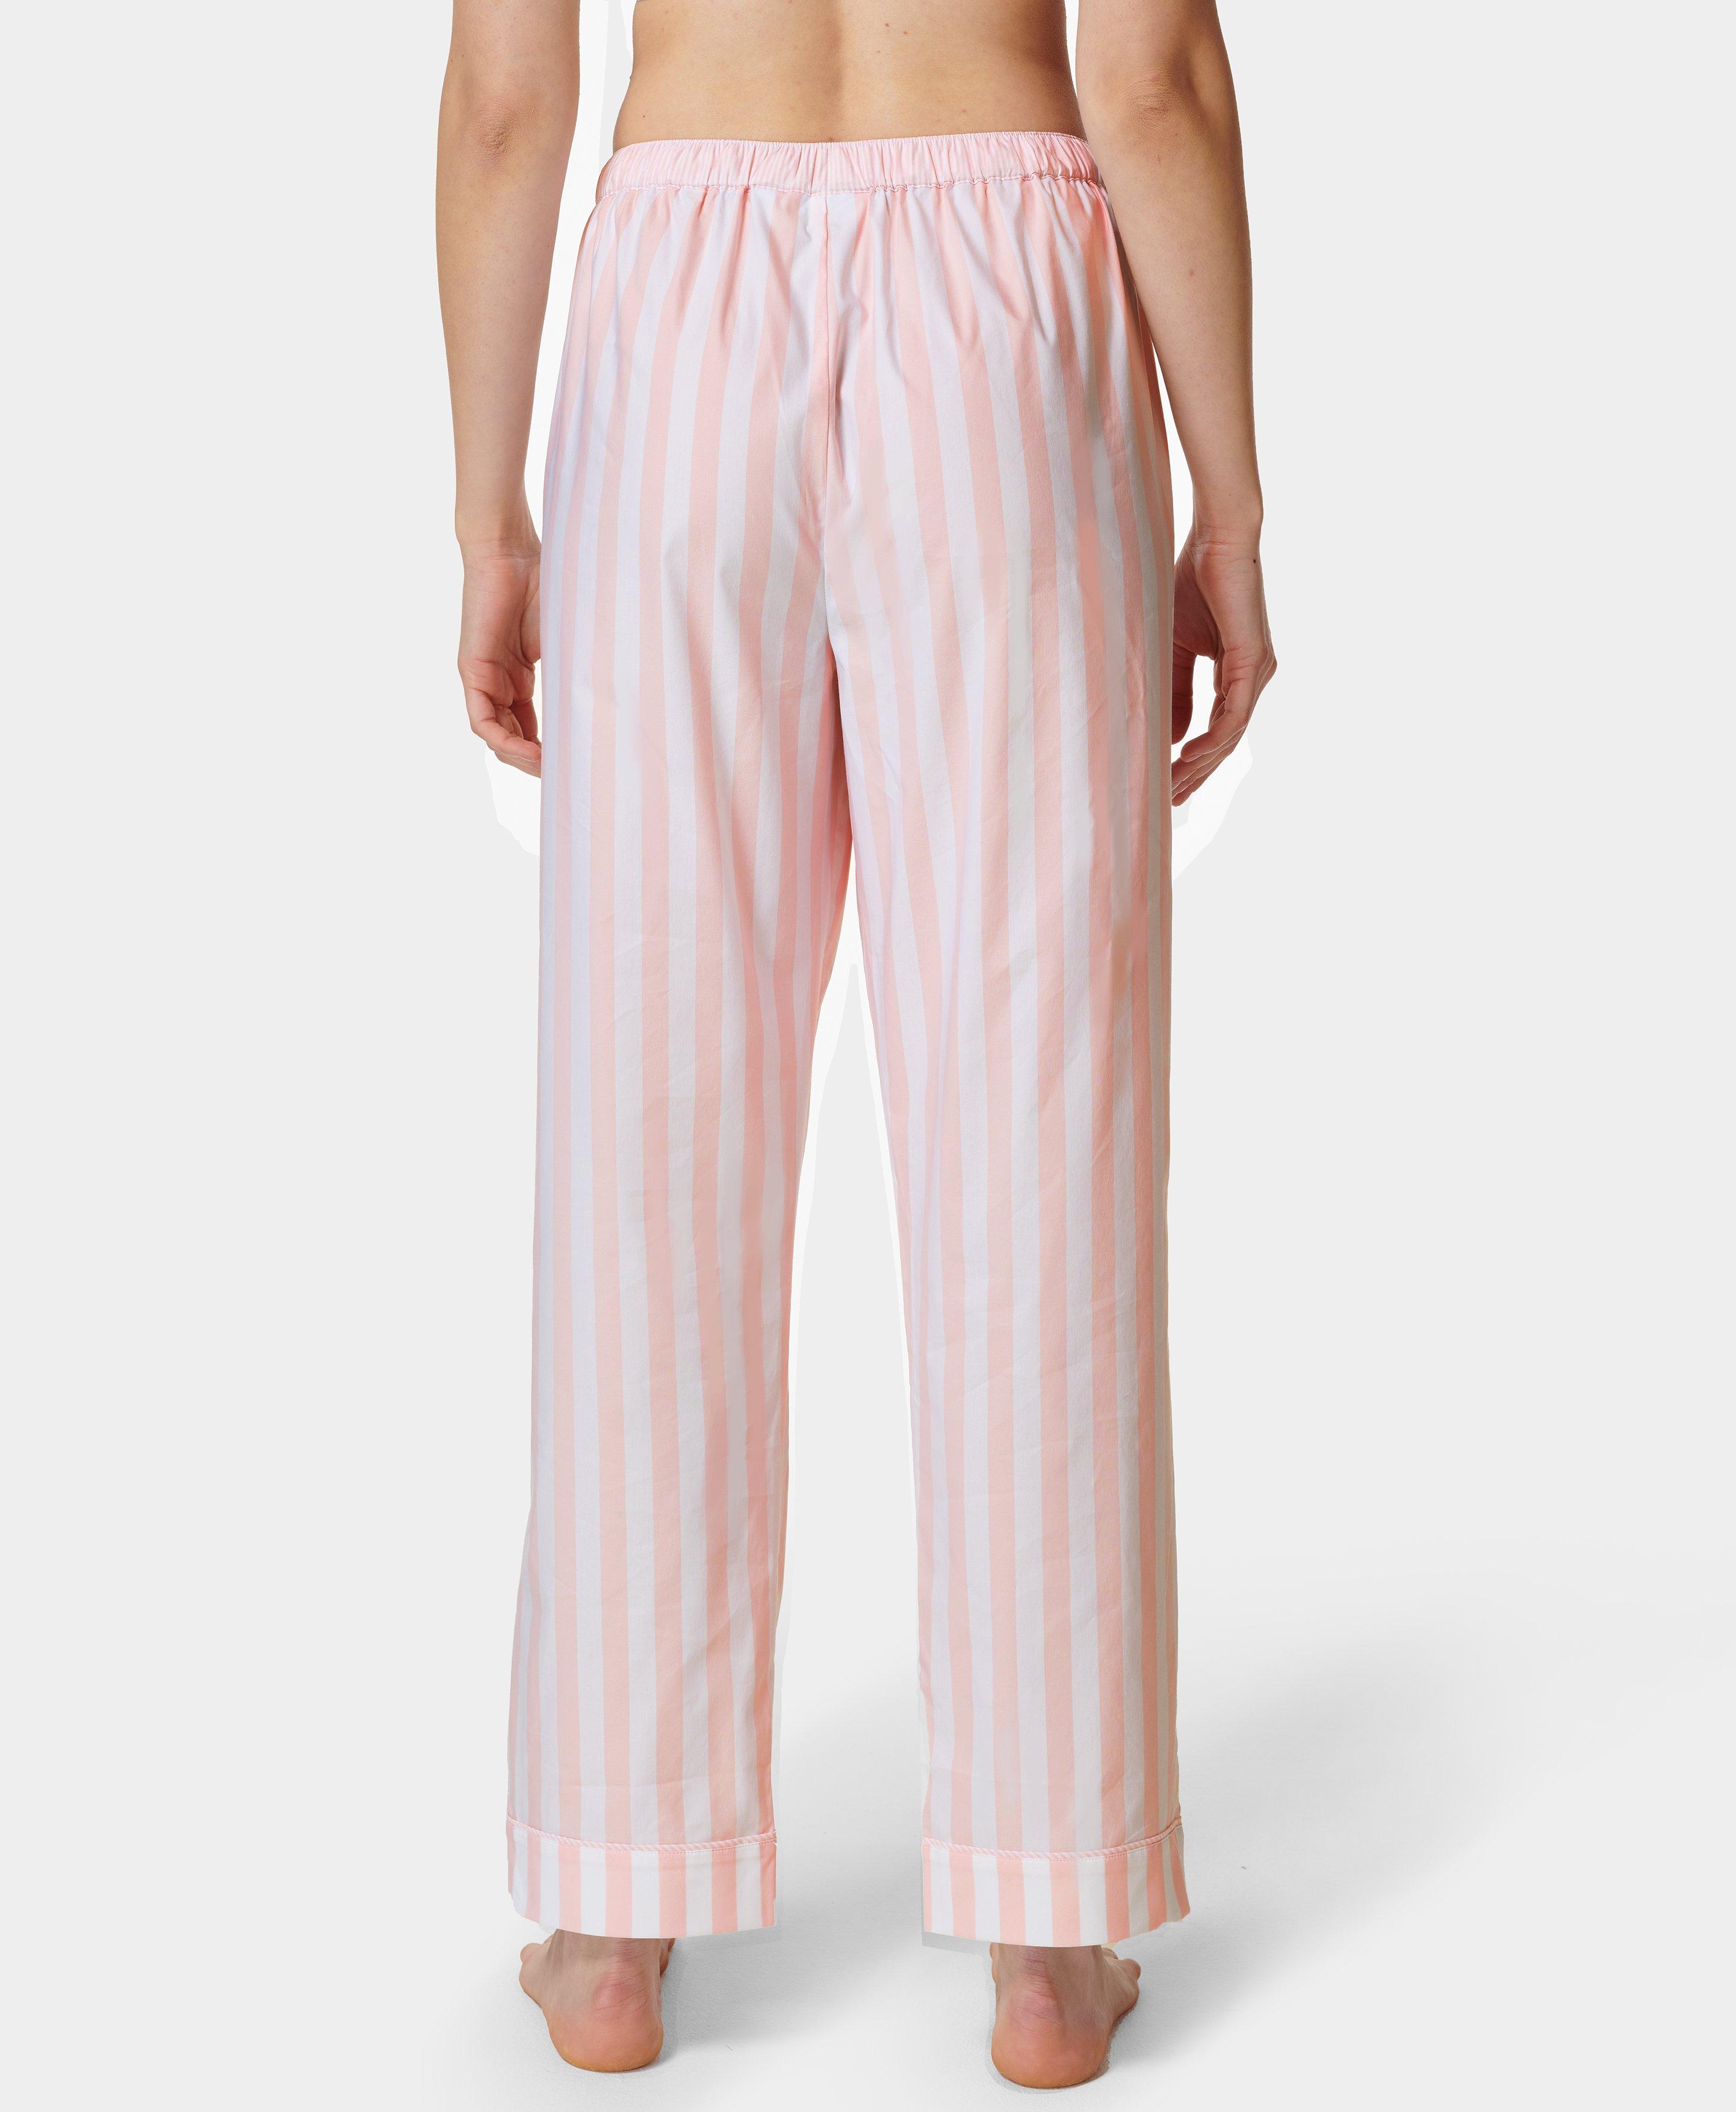 Restful Sleep Pant Powered by Brrr ° - Large Pink Stripe Print